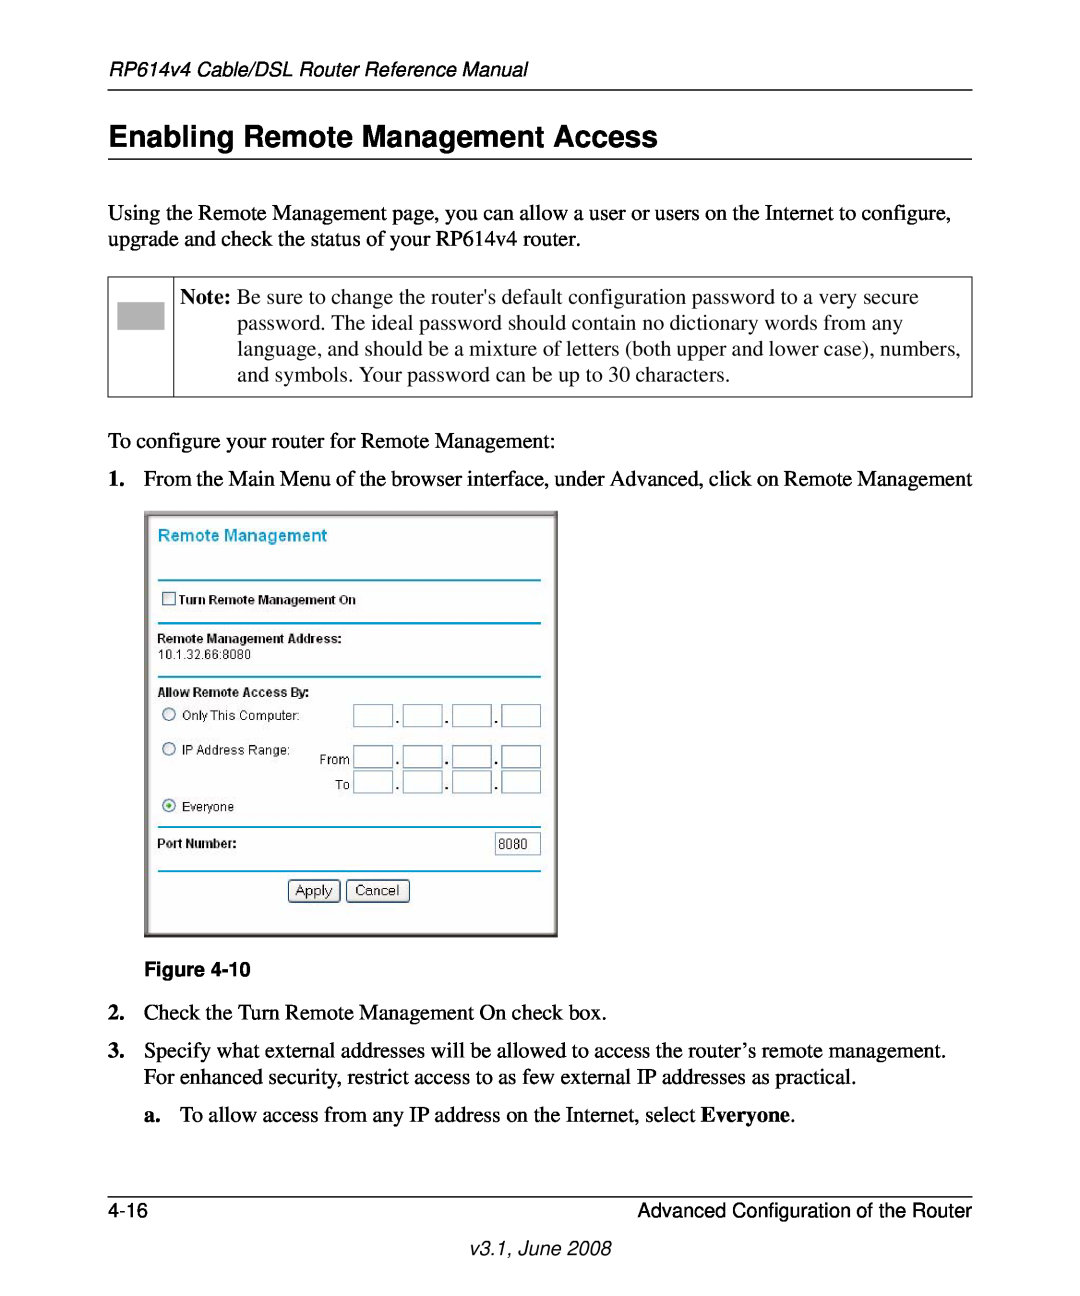 NETGEAR RP614 v4 manual Enabling Remote Management Access 